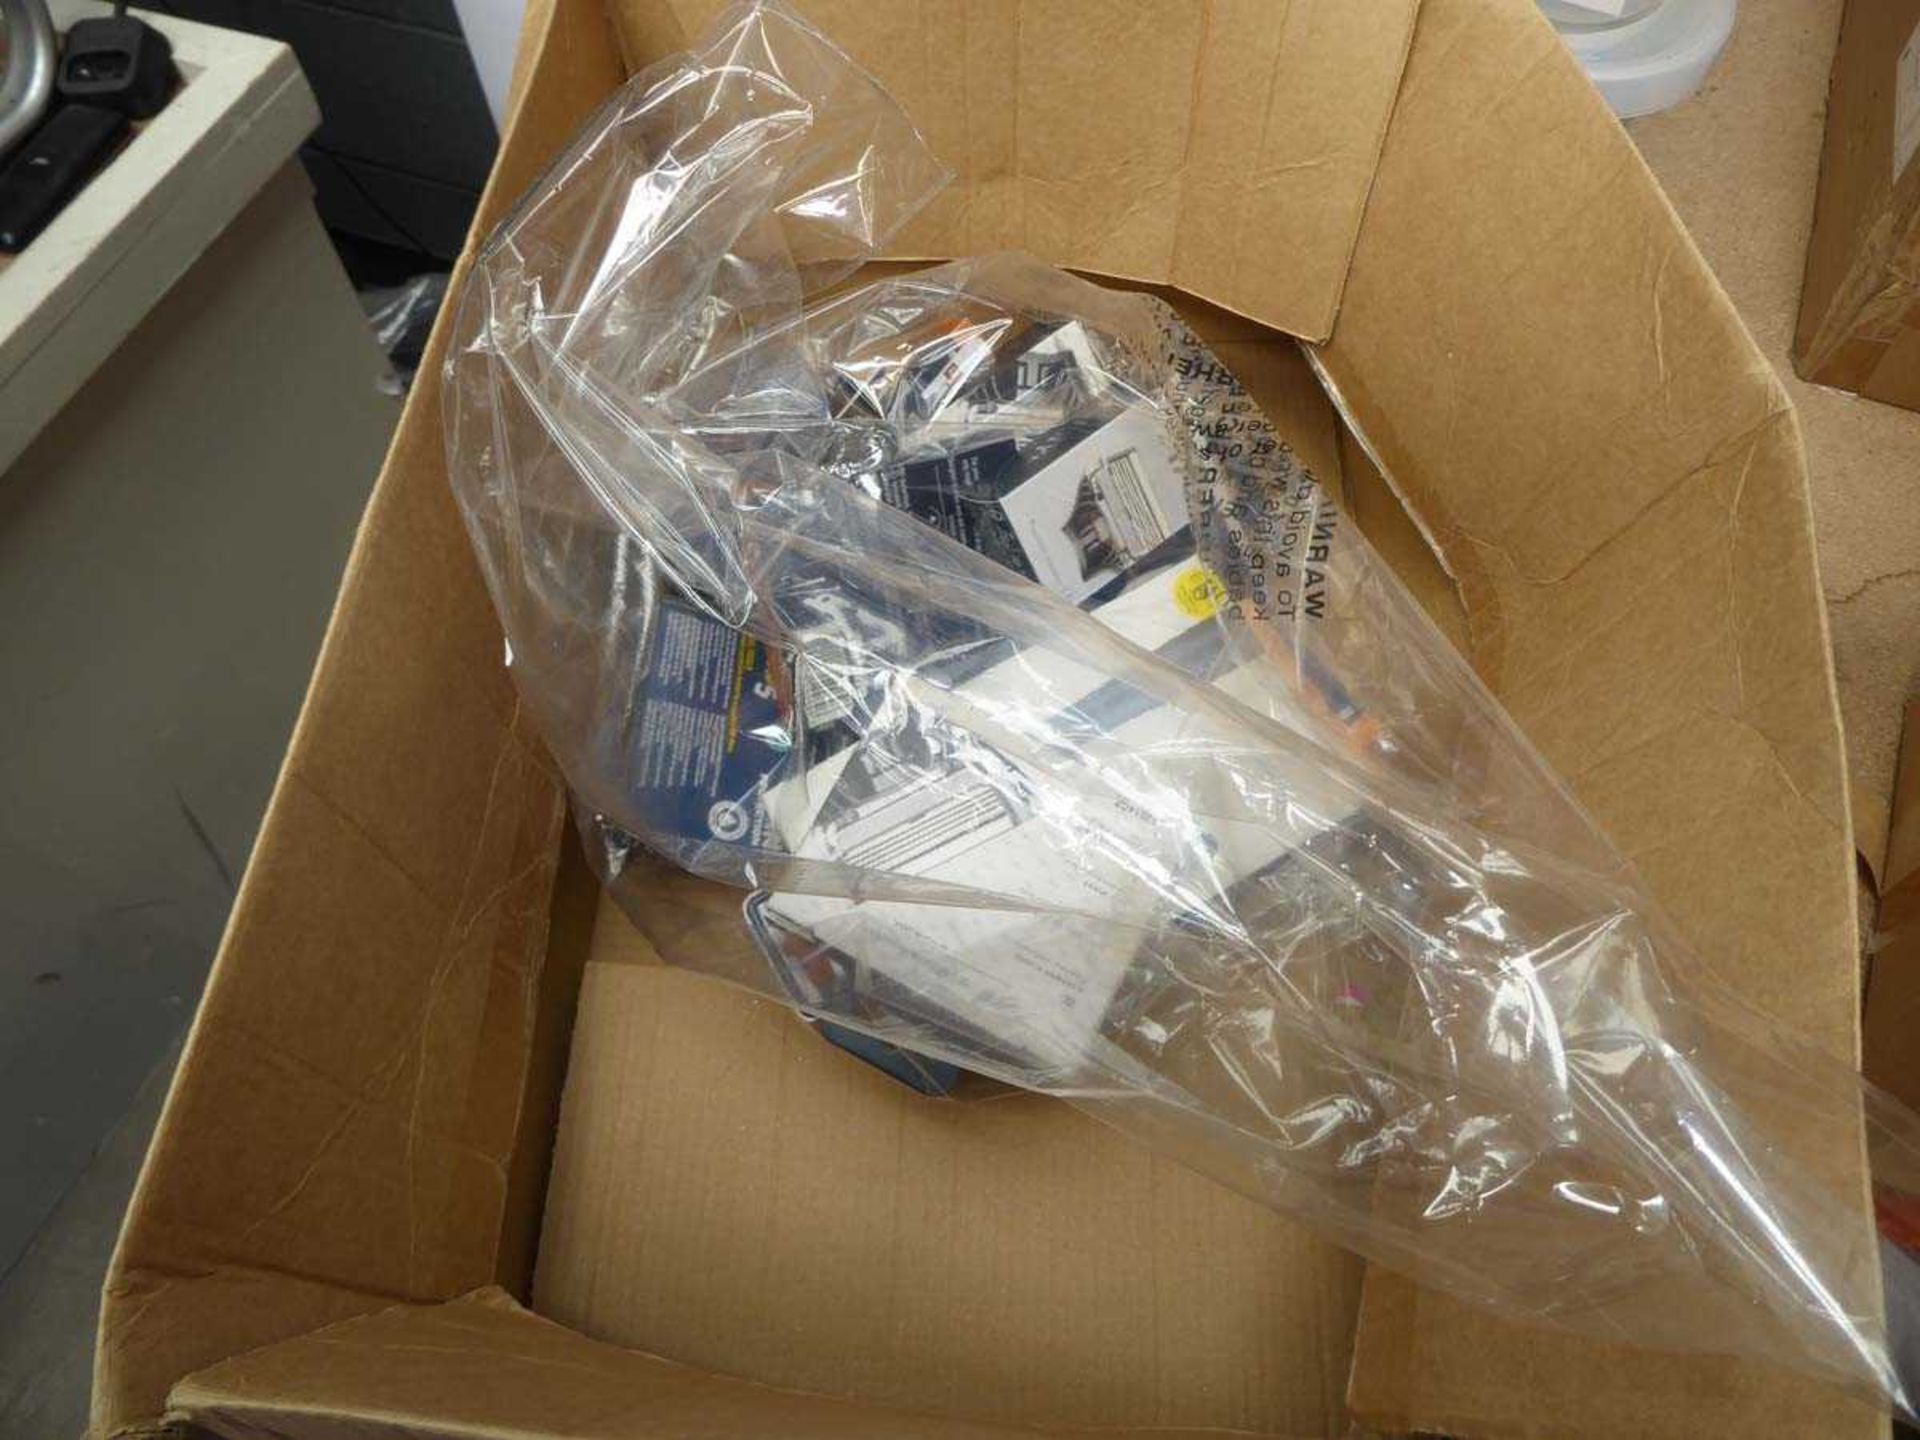 Box containing various shaver blade cartridges, Gilette etc